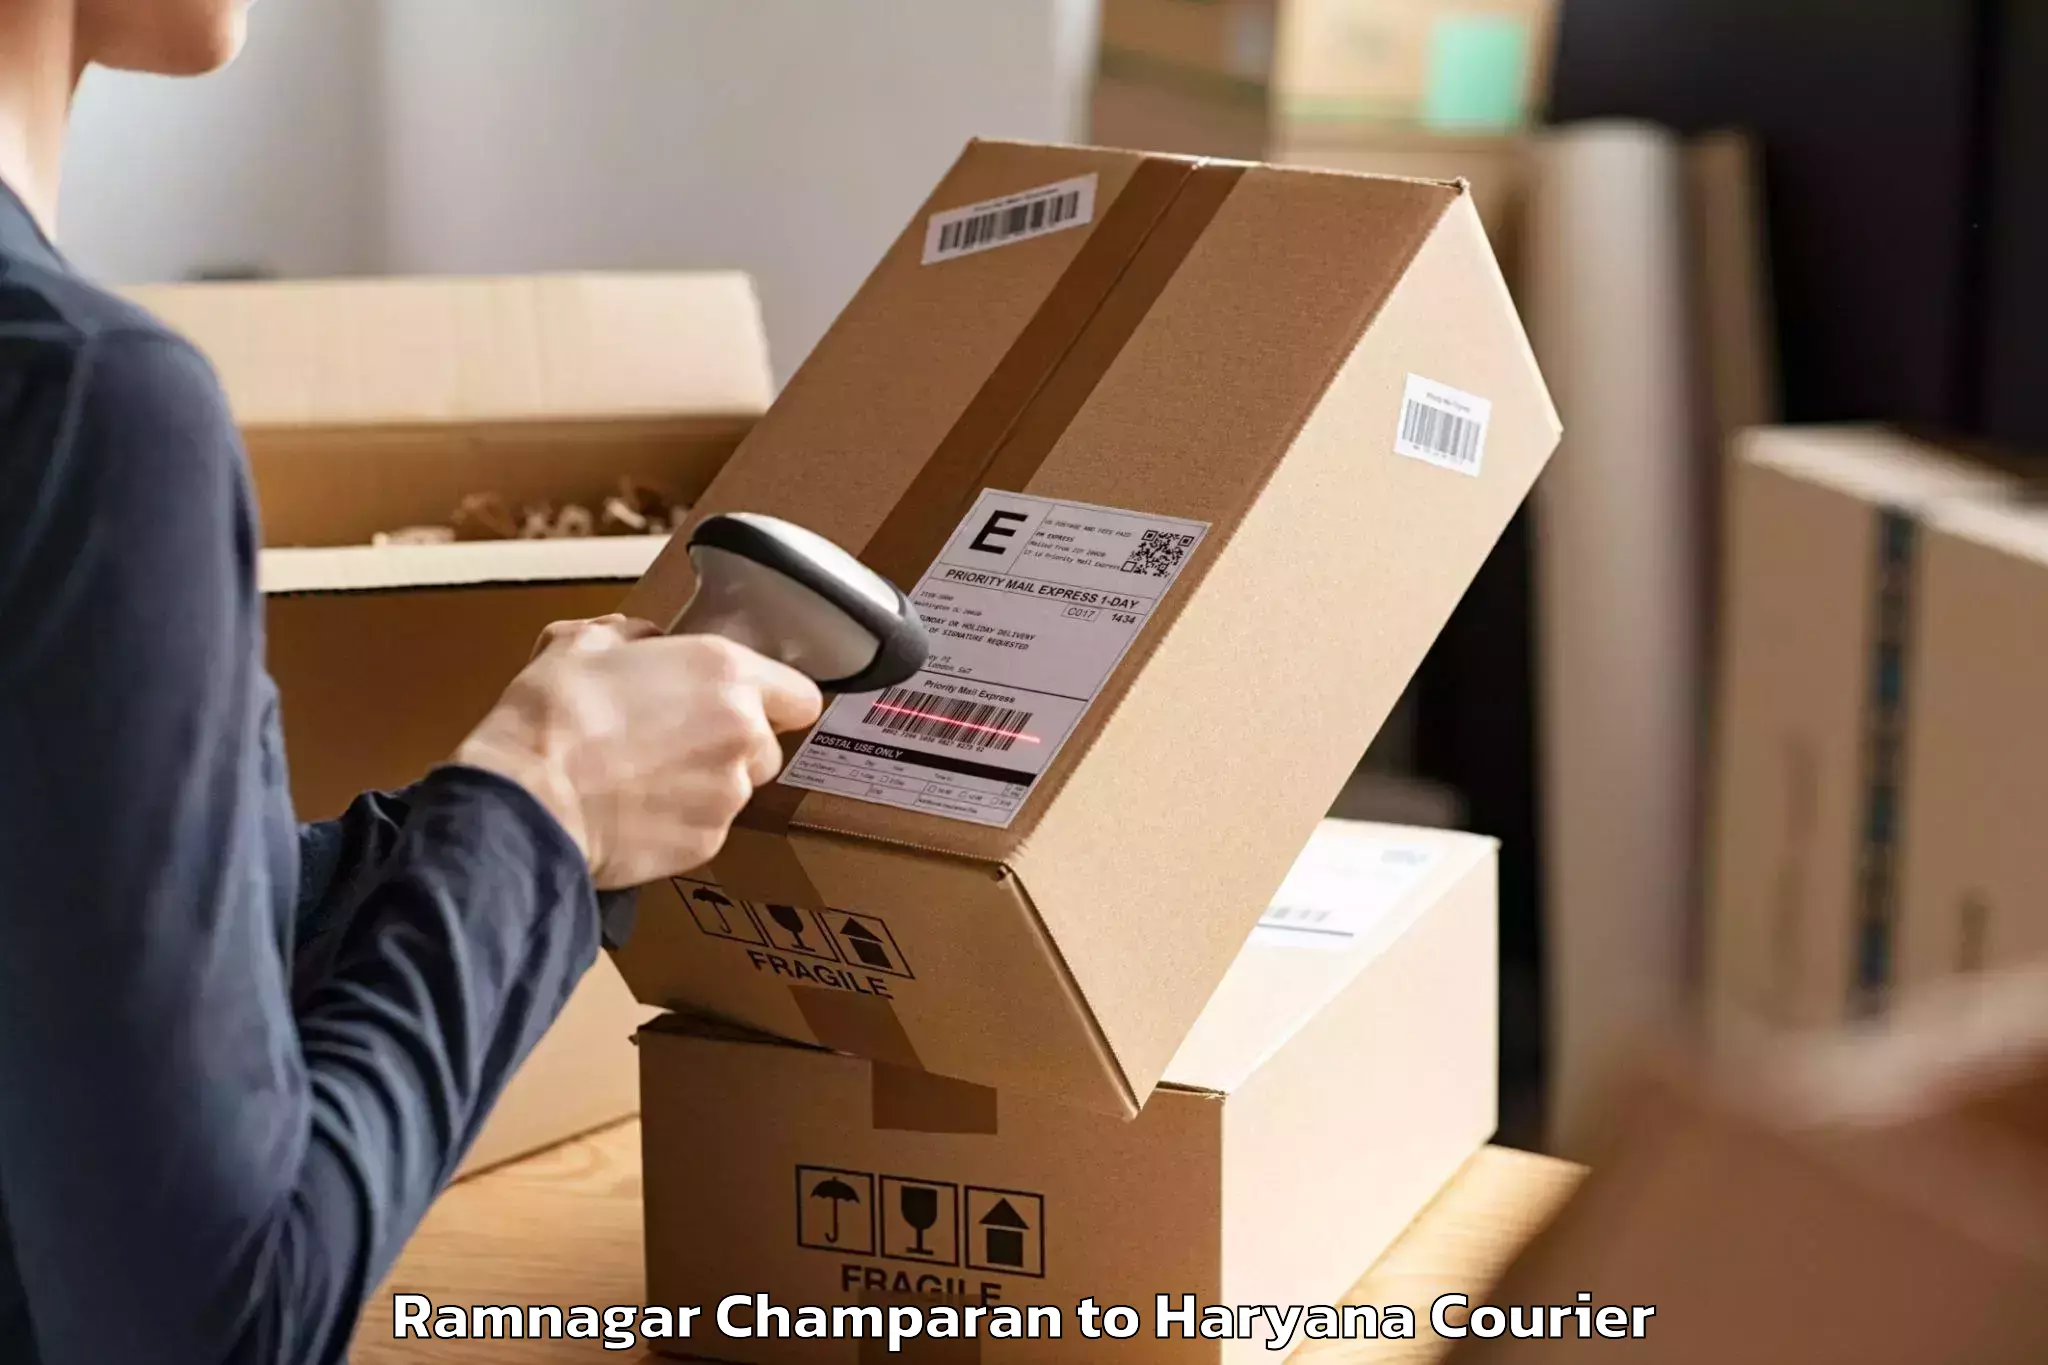 Professional packing services in Ramnagar Champaran to Bhiwani